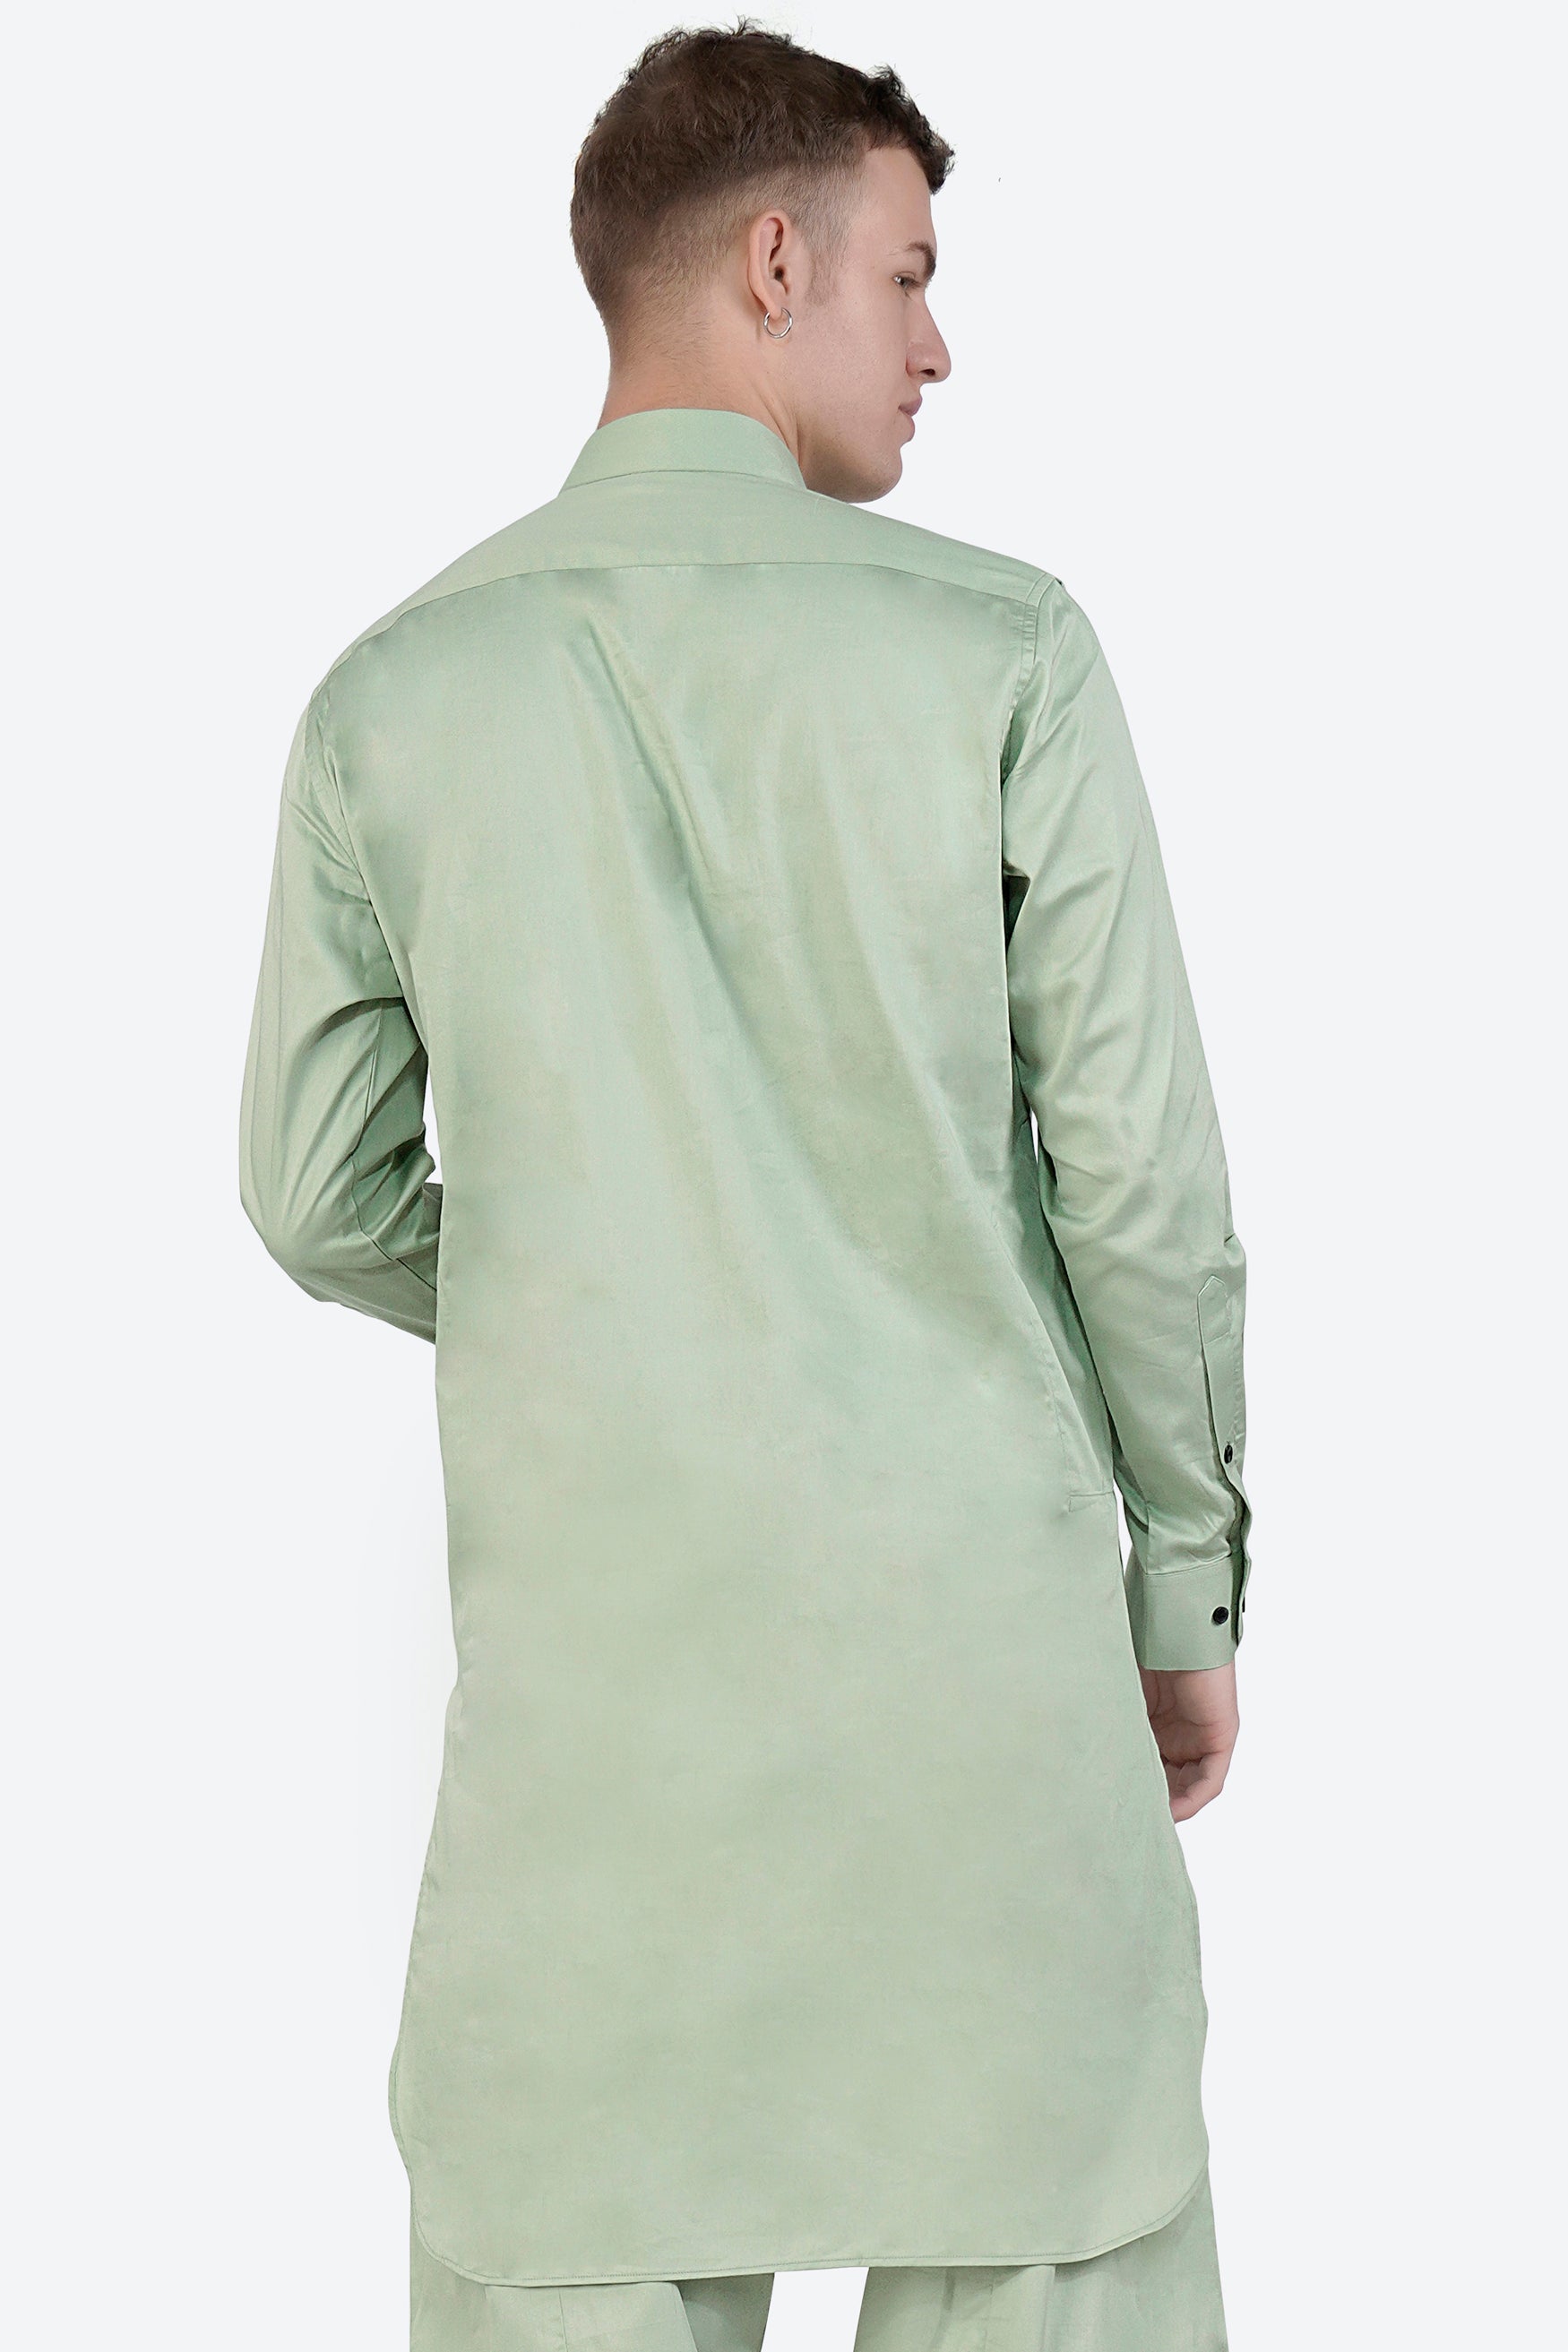 Coriander Green Subtle Sheen Super Soft Premium Cotton Pathani